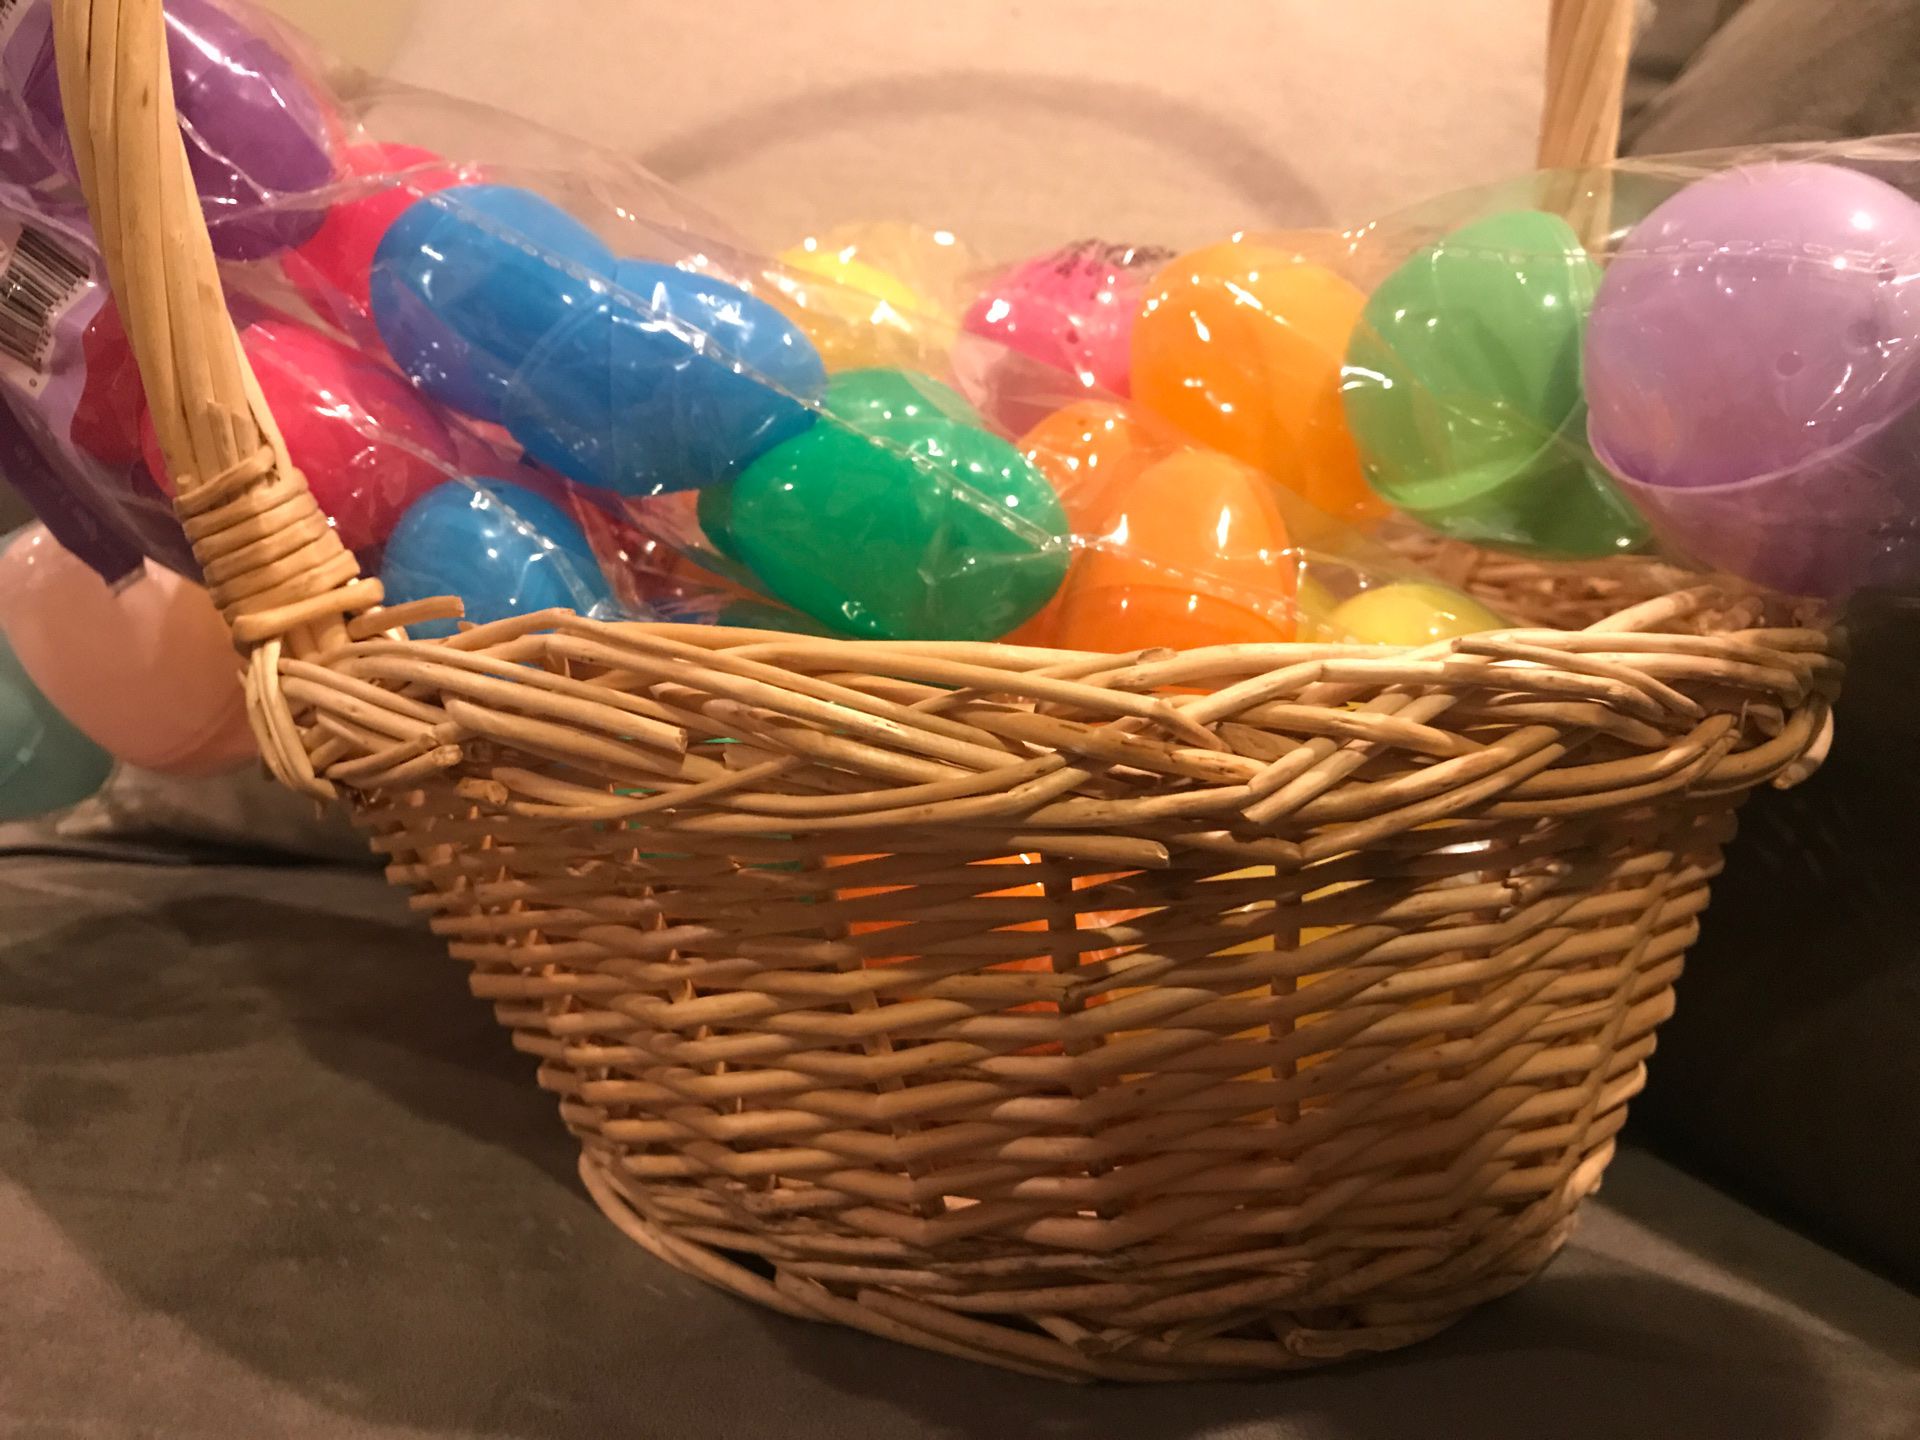 Easter Basket 🧺 with Plastic Eggs to Fill - Canasta con Huevitos Para rellenar